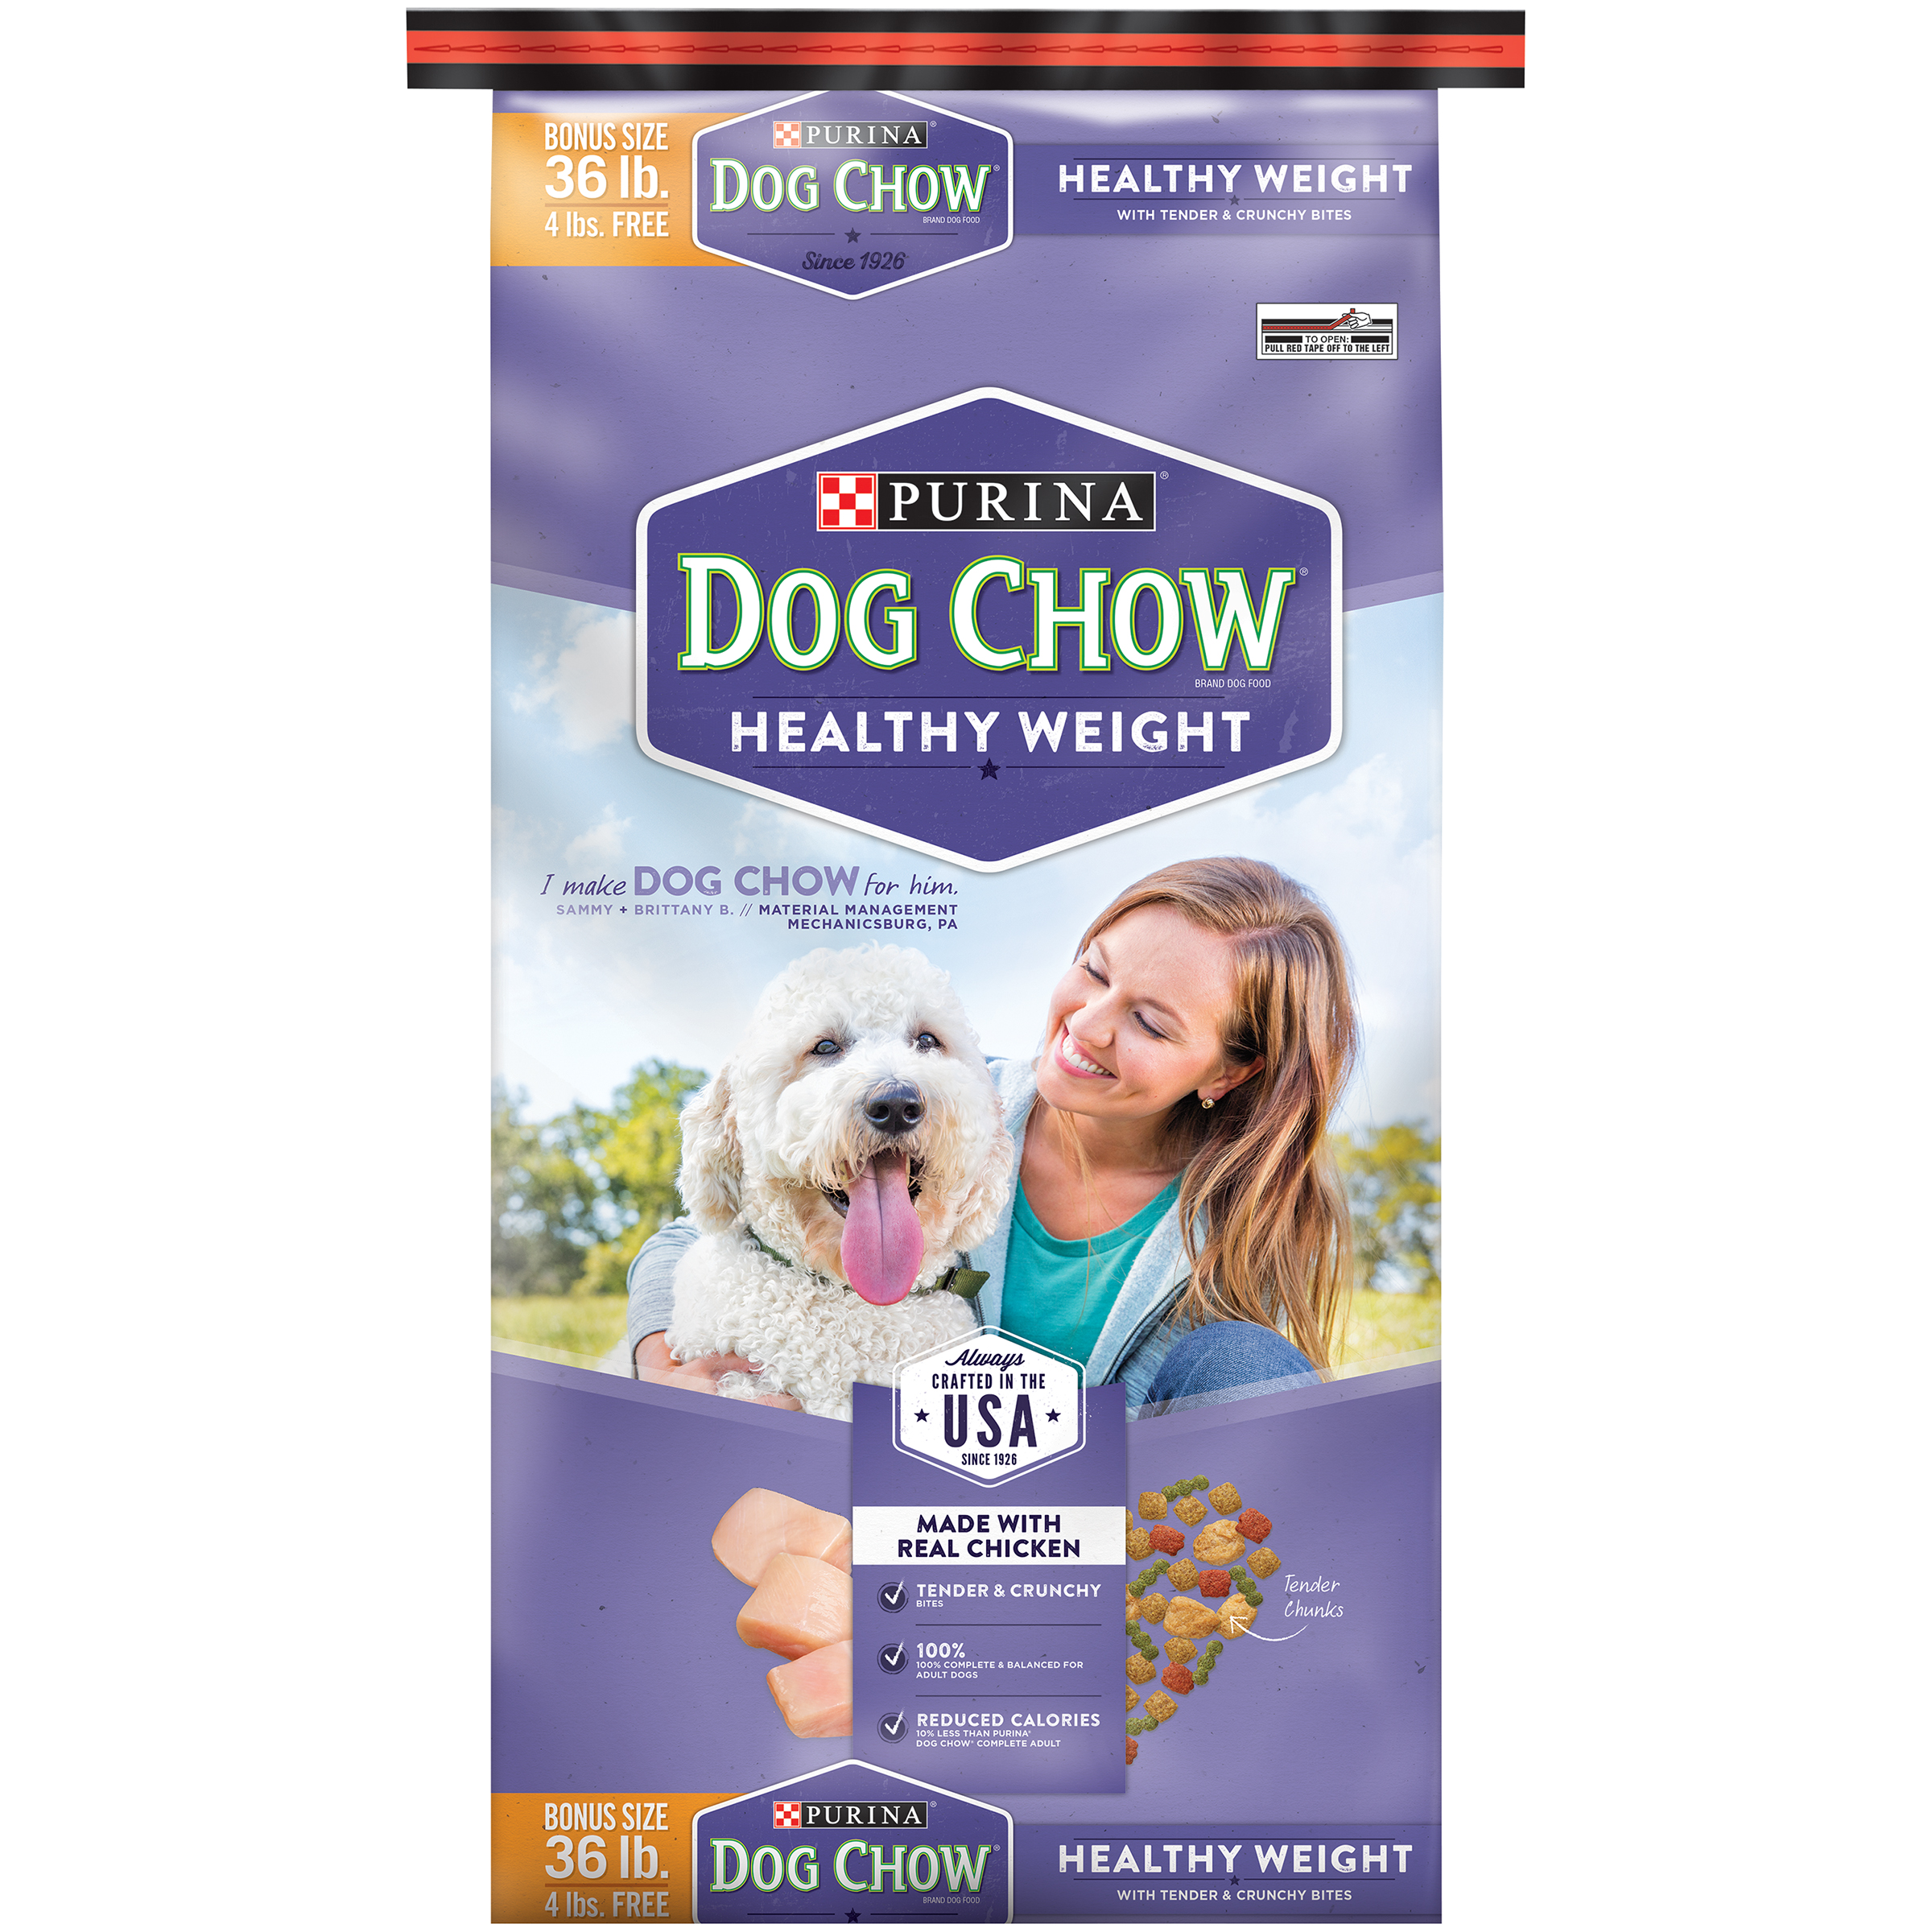 0017800174381 - DOG CHOW HEALTHY WEIGHT DOG FOOD BONUS SIZE 36 LB. BAG